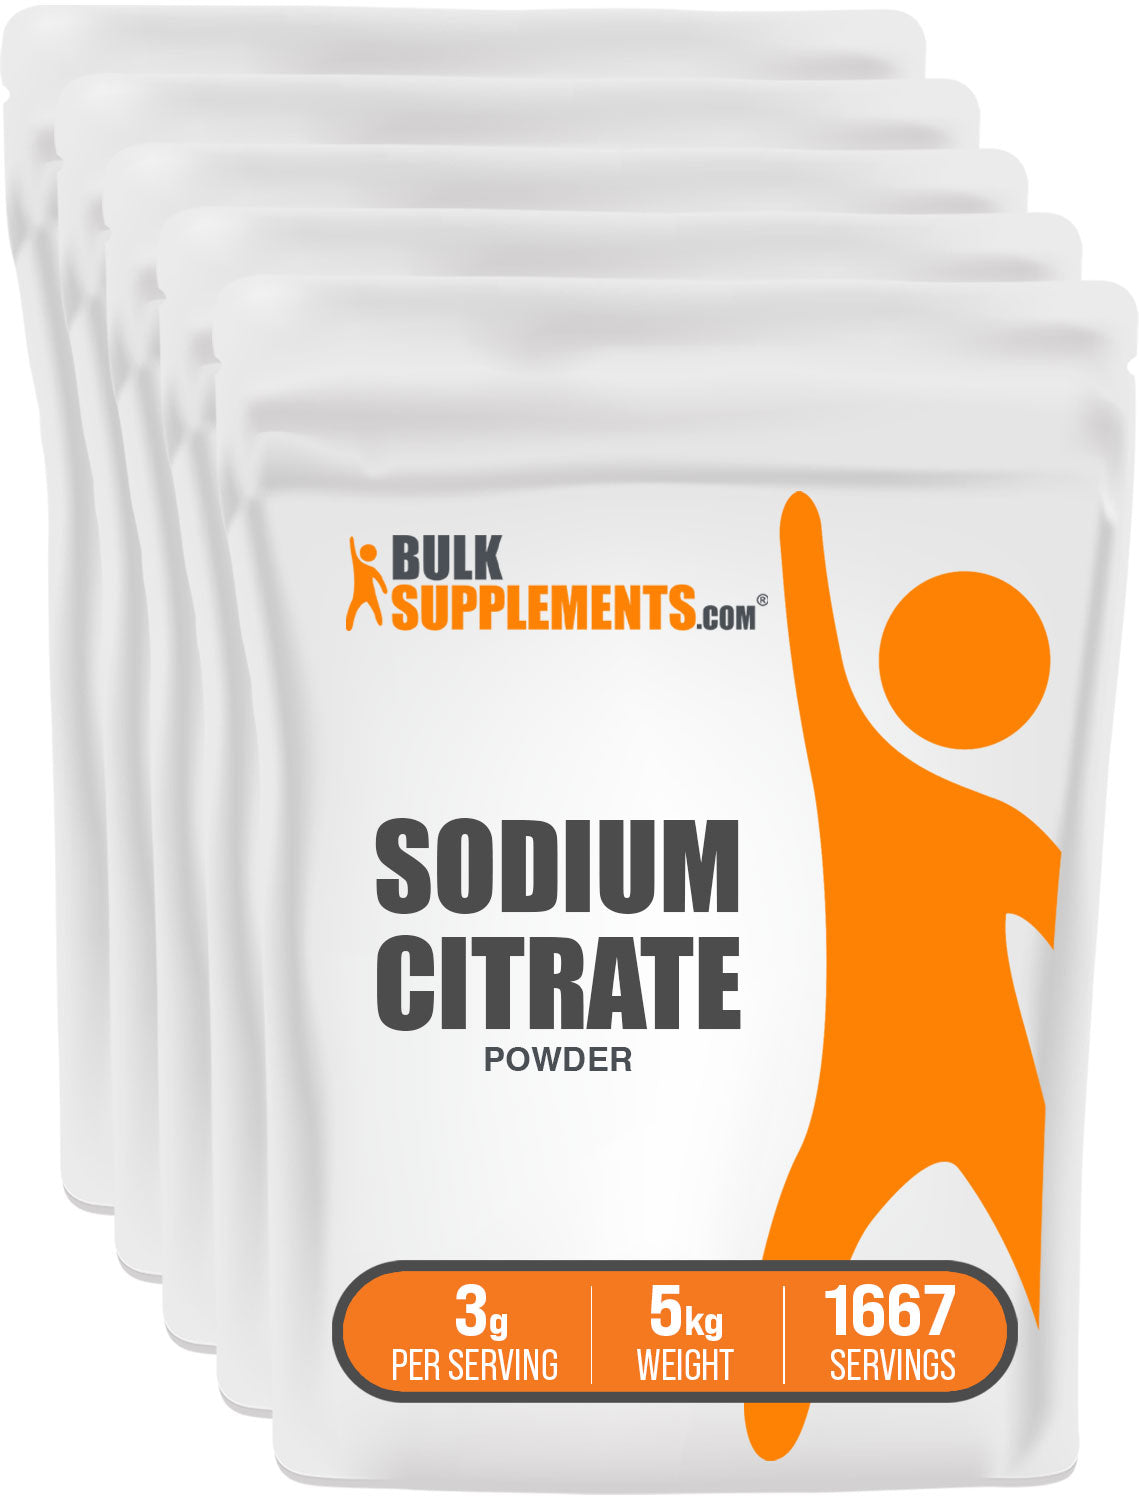 BulkSupplements Sodium Citrate Powder 5kg bag